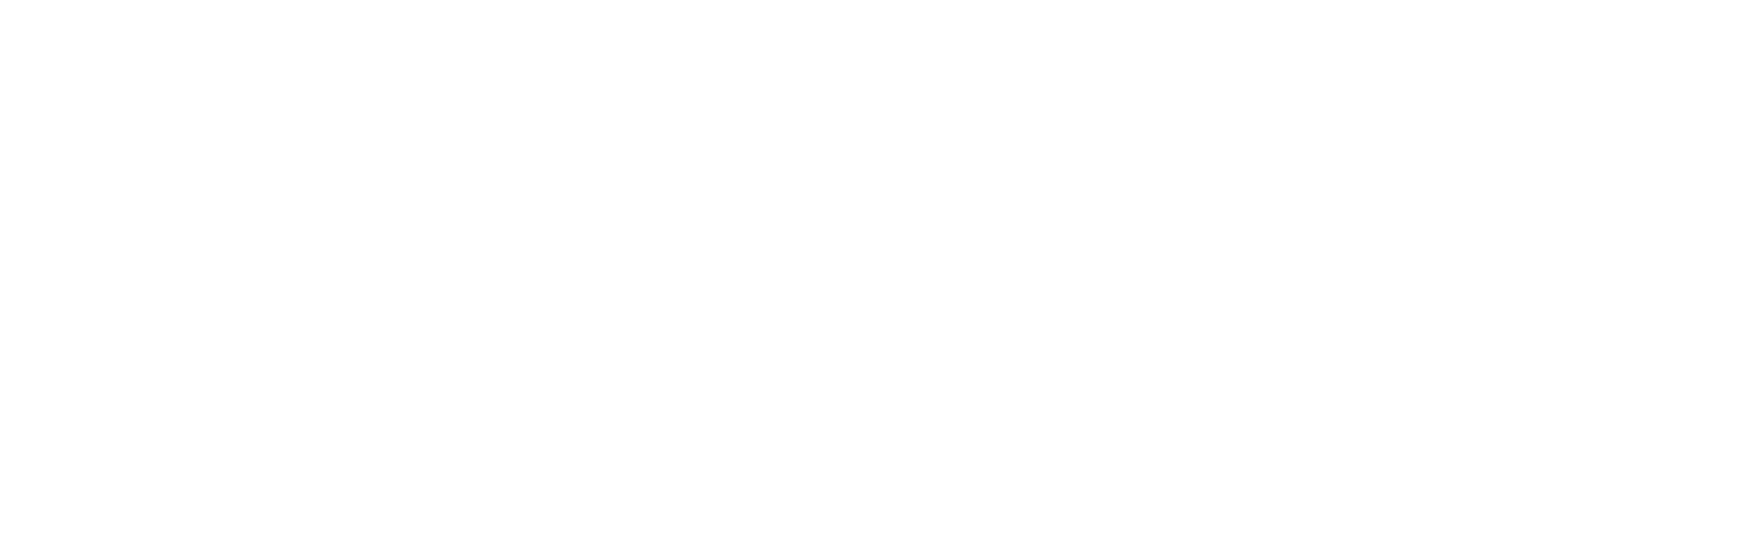 Nordic_council